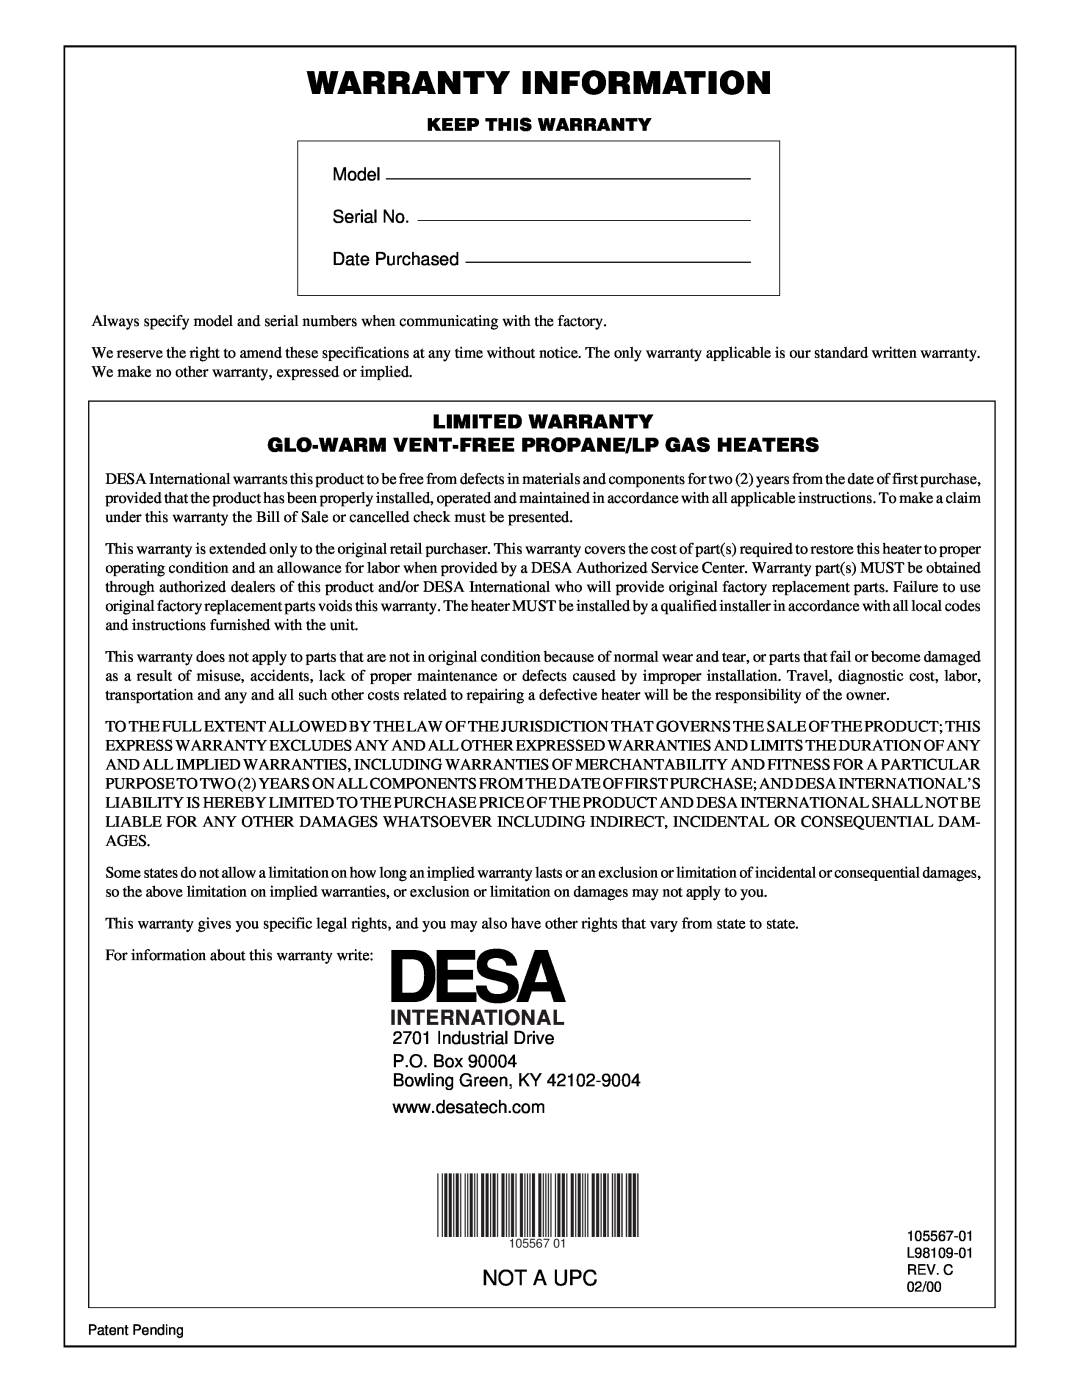 Desa FB-3B Warranty Information, International, Limited Warranty Glo-Warm Vent-Free Propane/Lp Gas Heaters, Not A Upc 